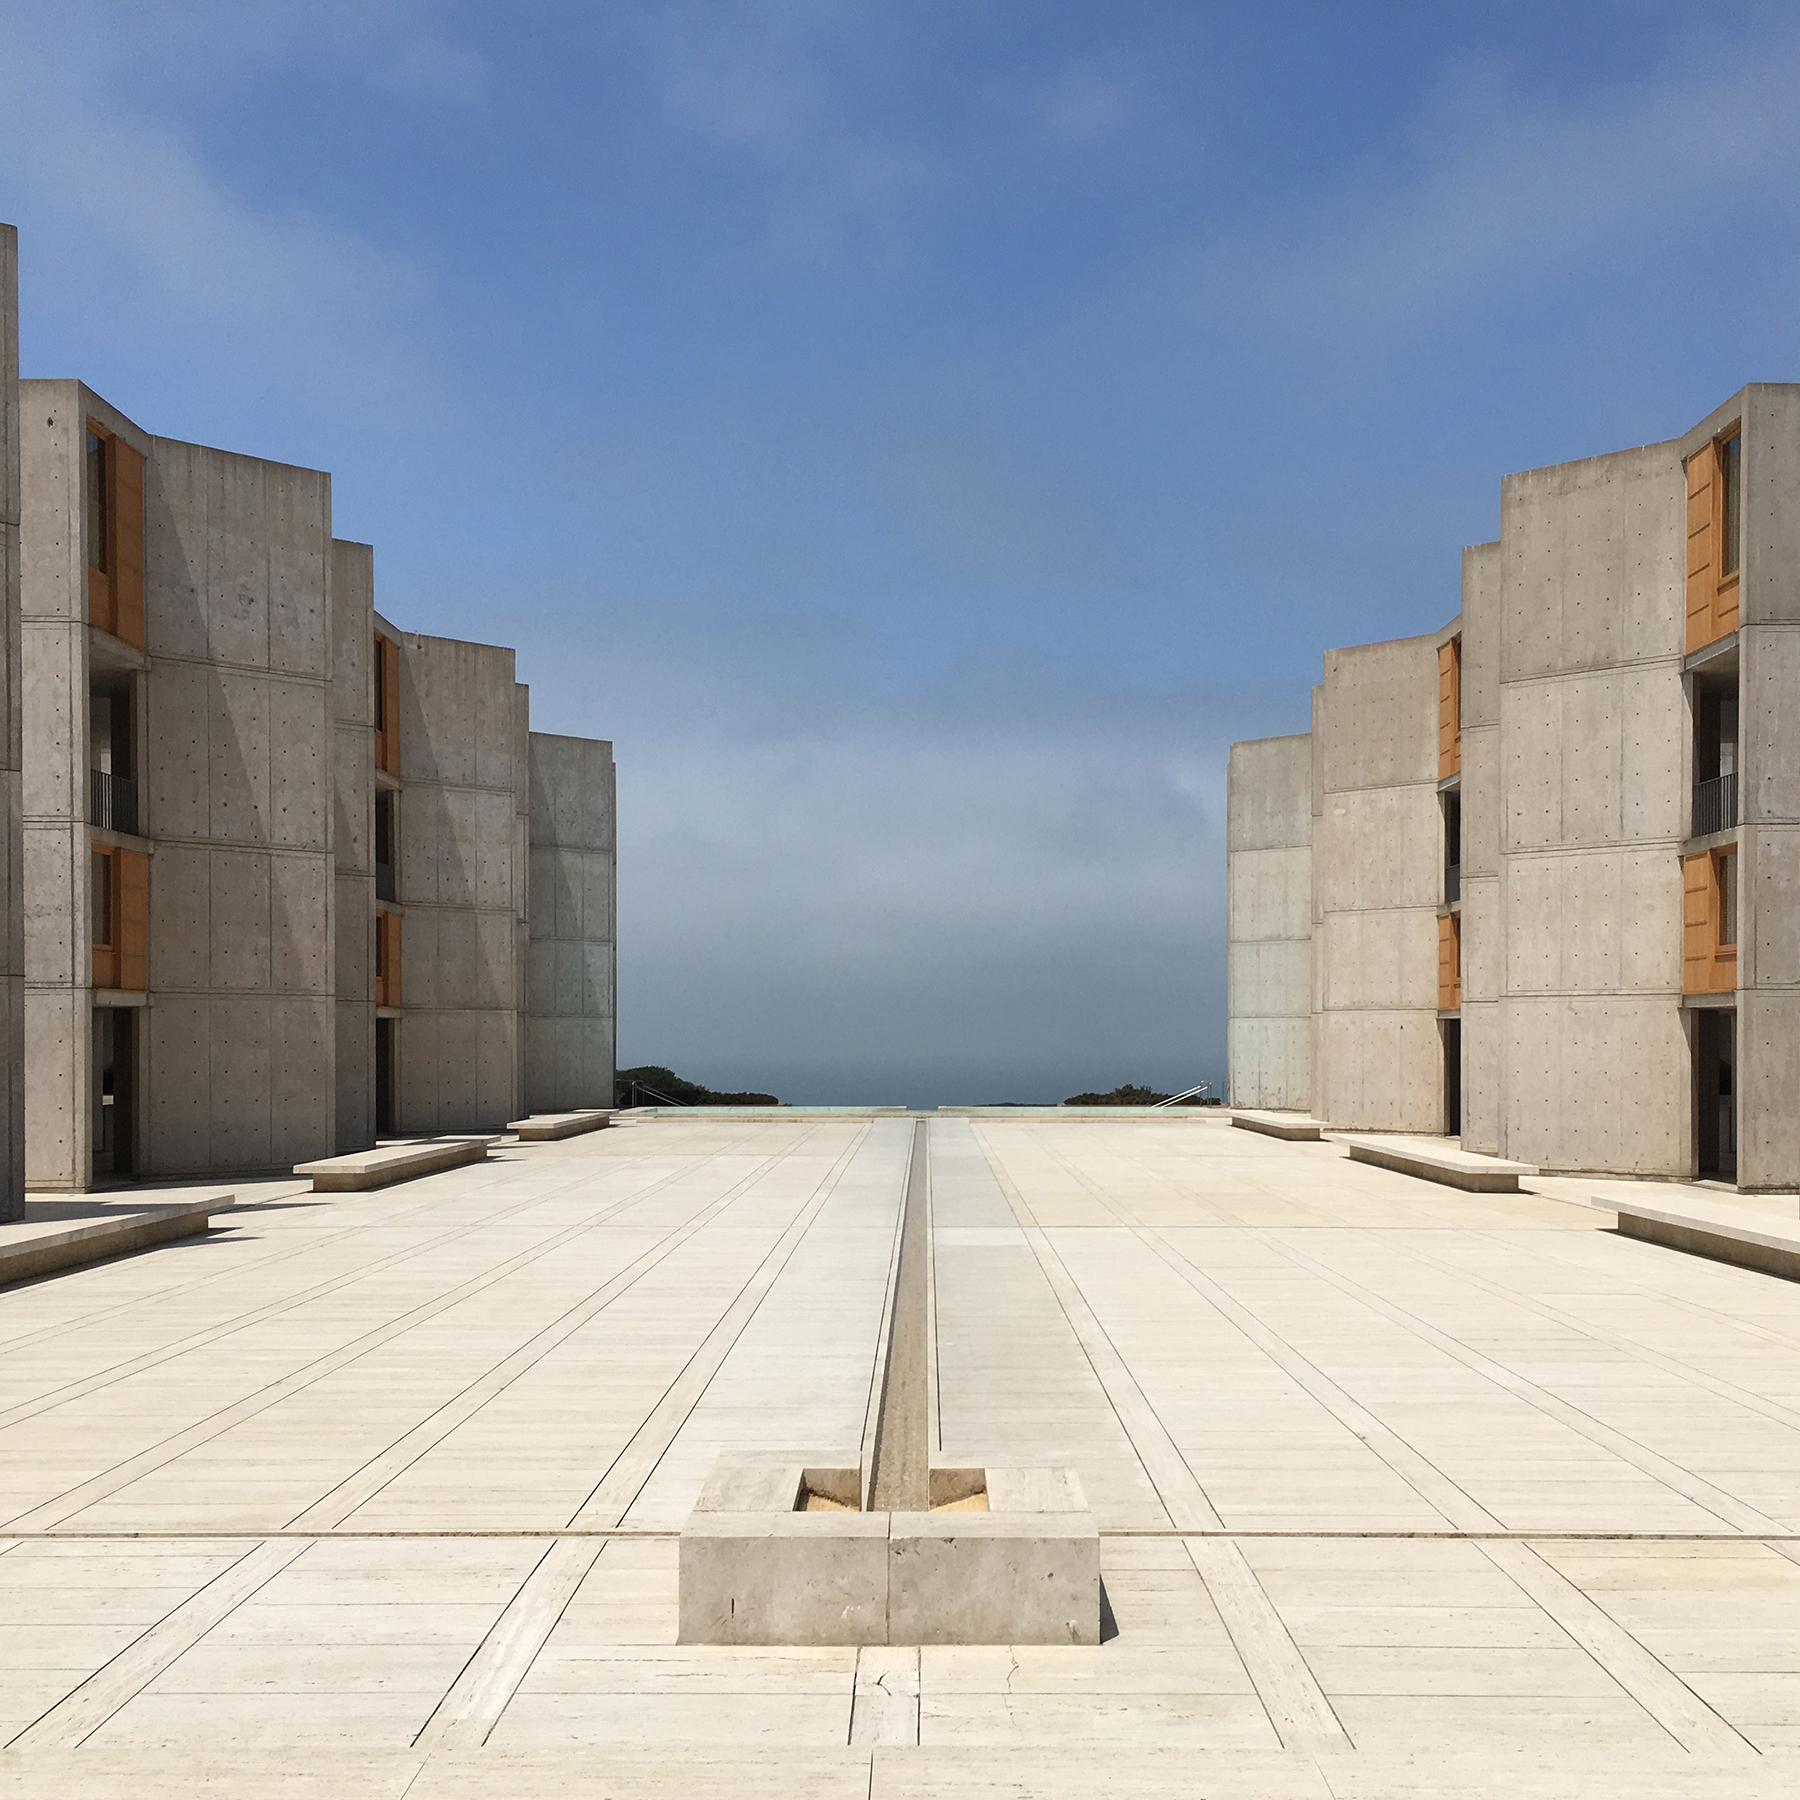 Courtyard of the Salk Institute in La Jolla, California